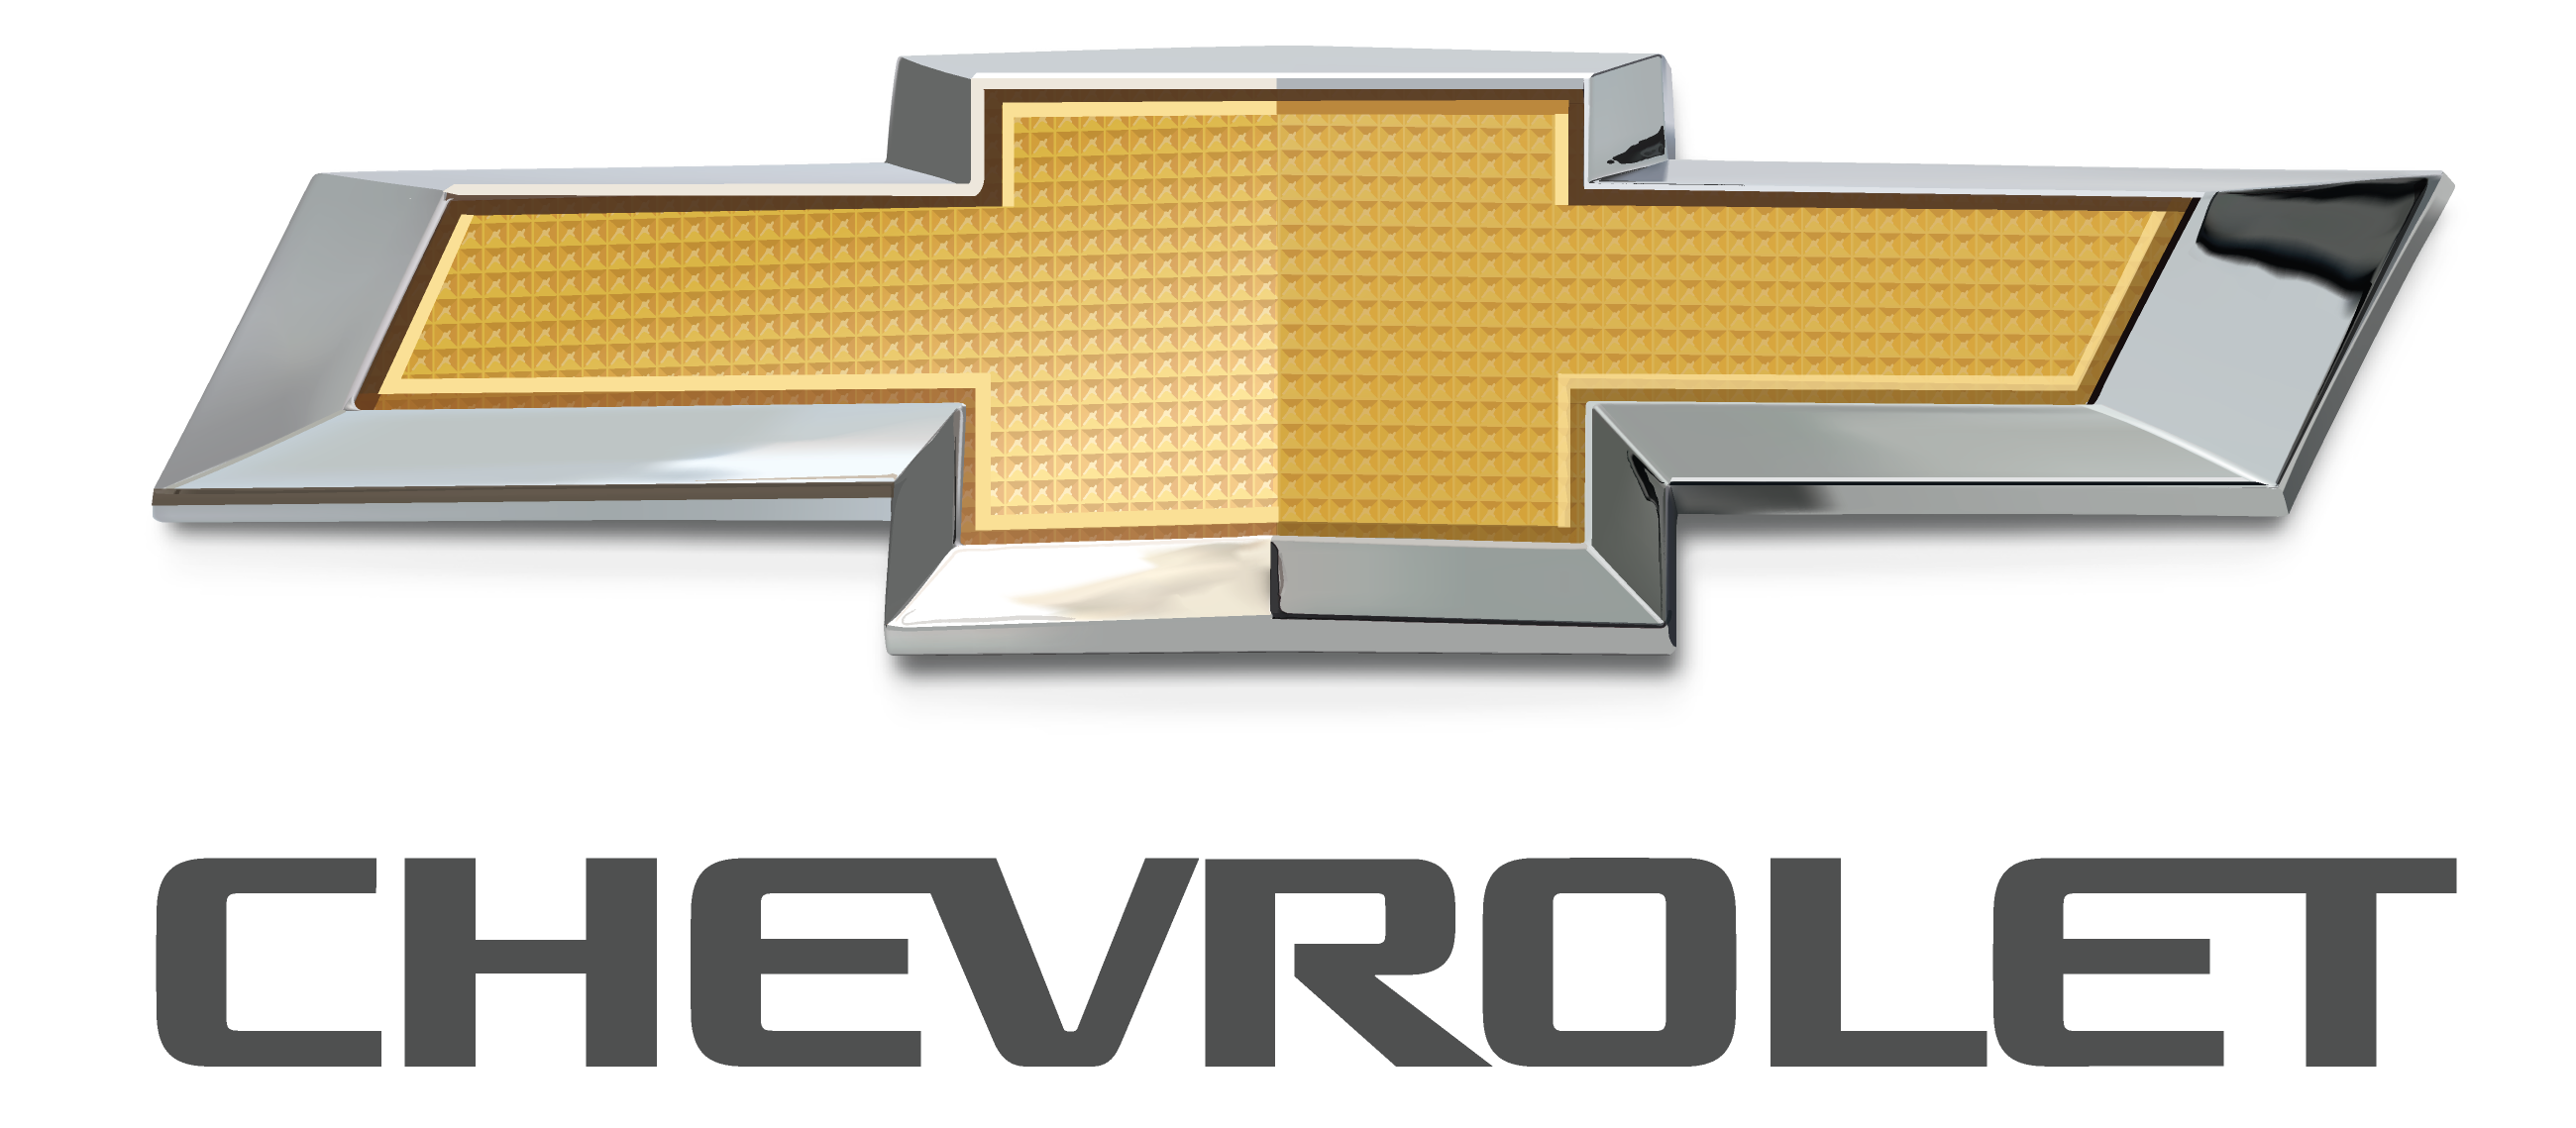 American Chevrolet Car Logo Download - Chevrolet, Transparent background PNG HD thumbnail